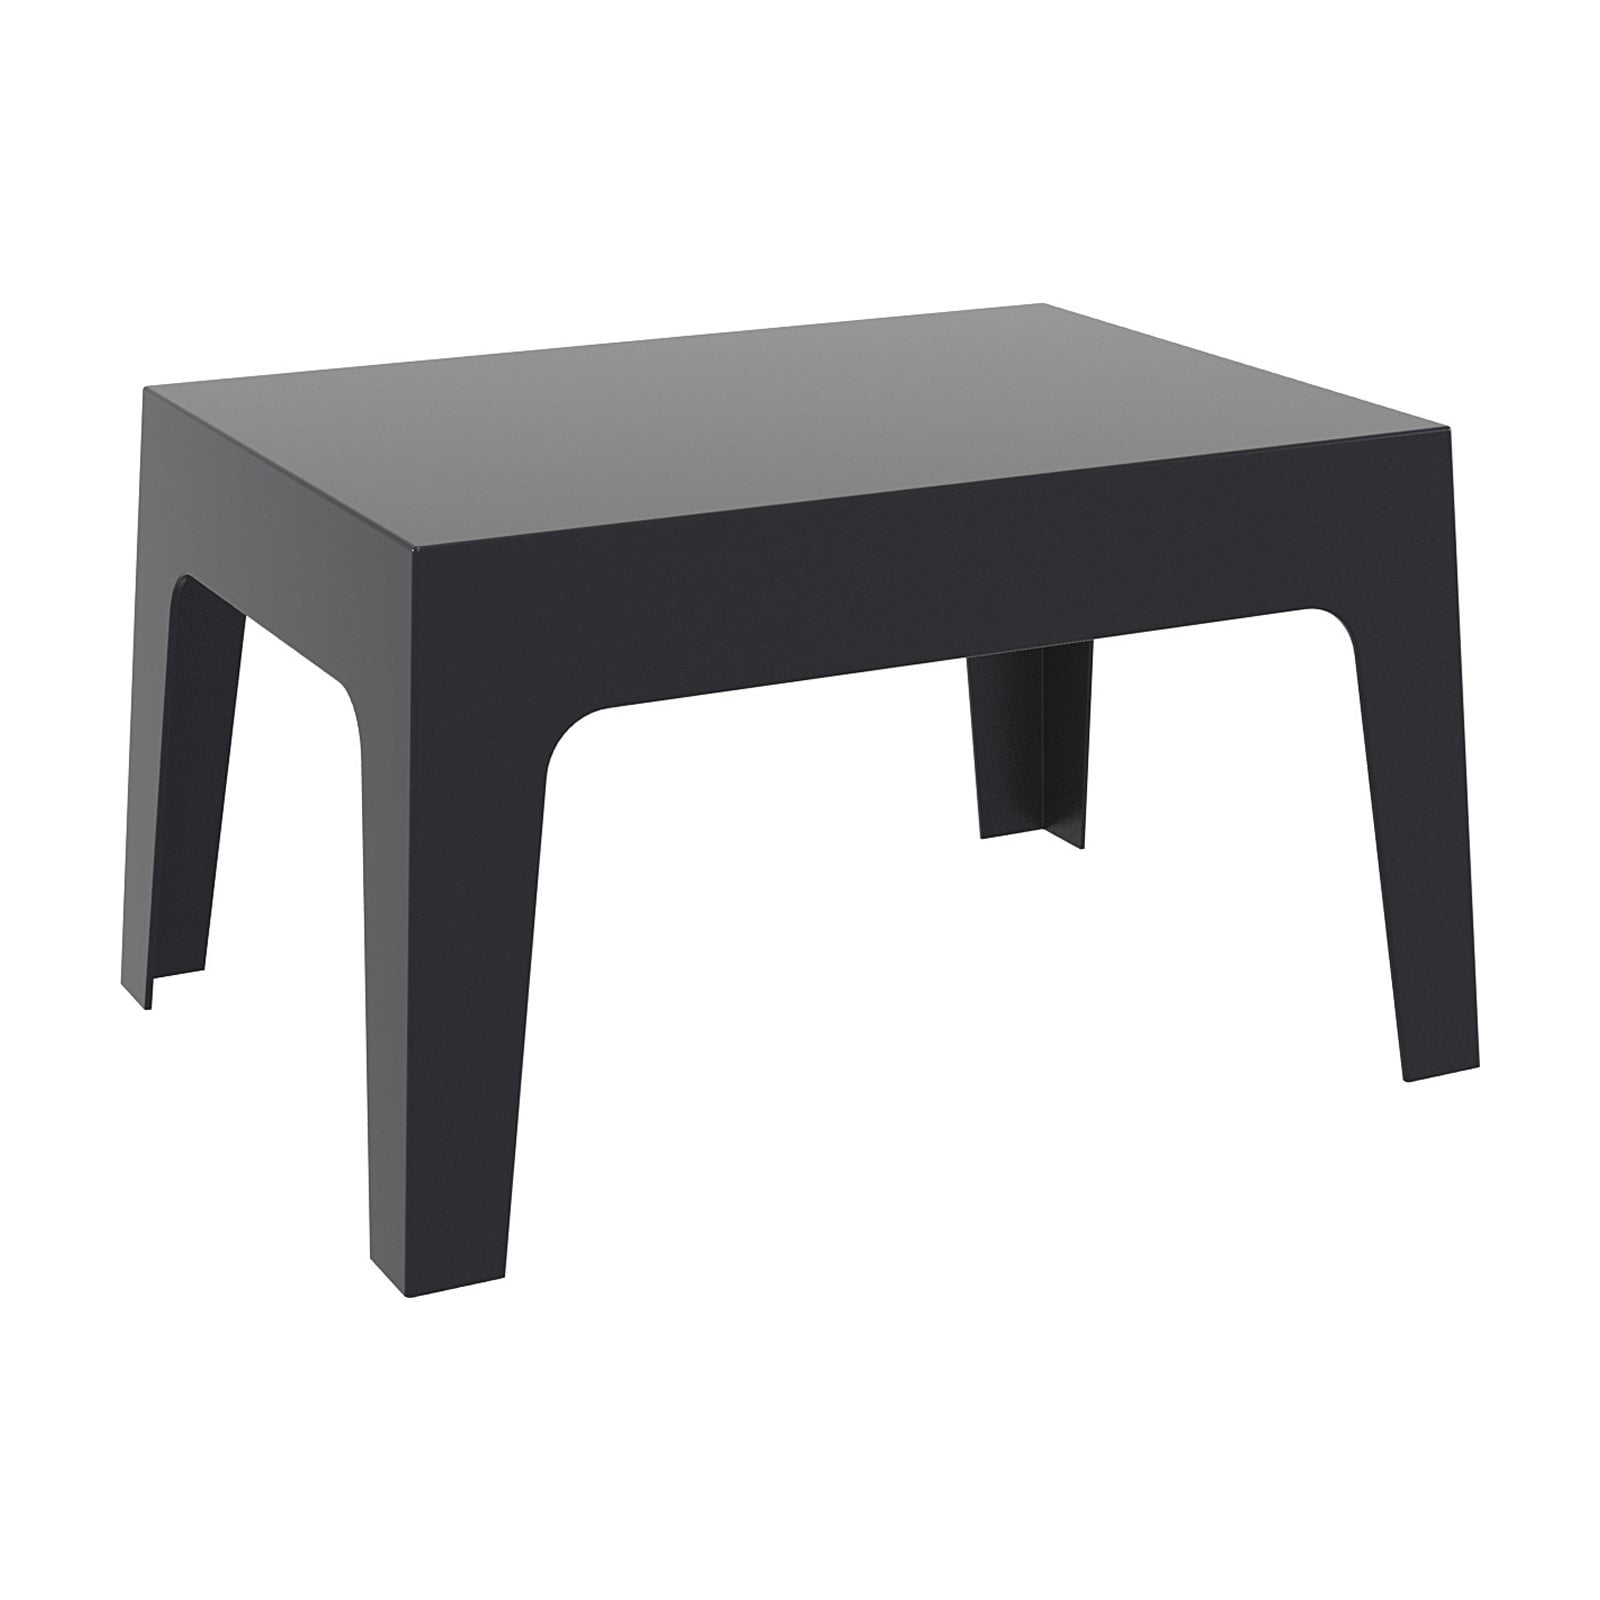 Isp064-bla Box Resin Outdoor Center Table, Black